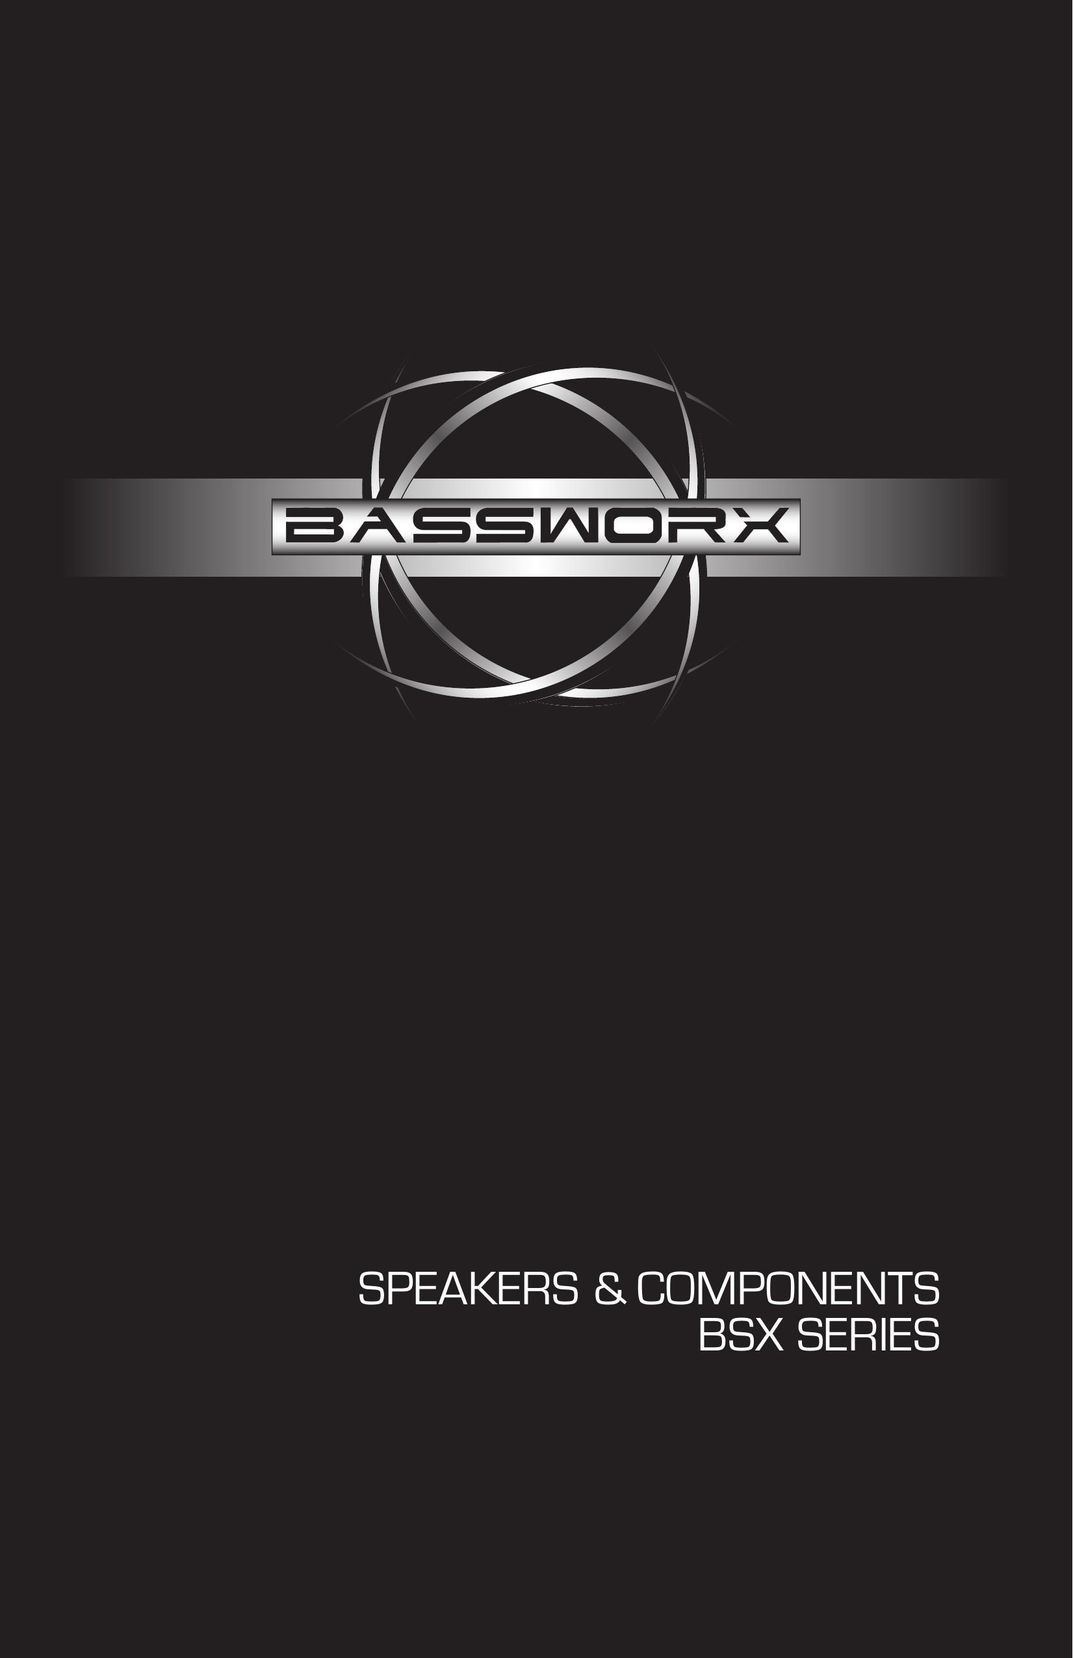 Bassworx BSX50.1 Car Speaker User Manual